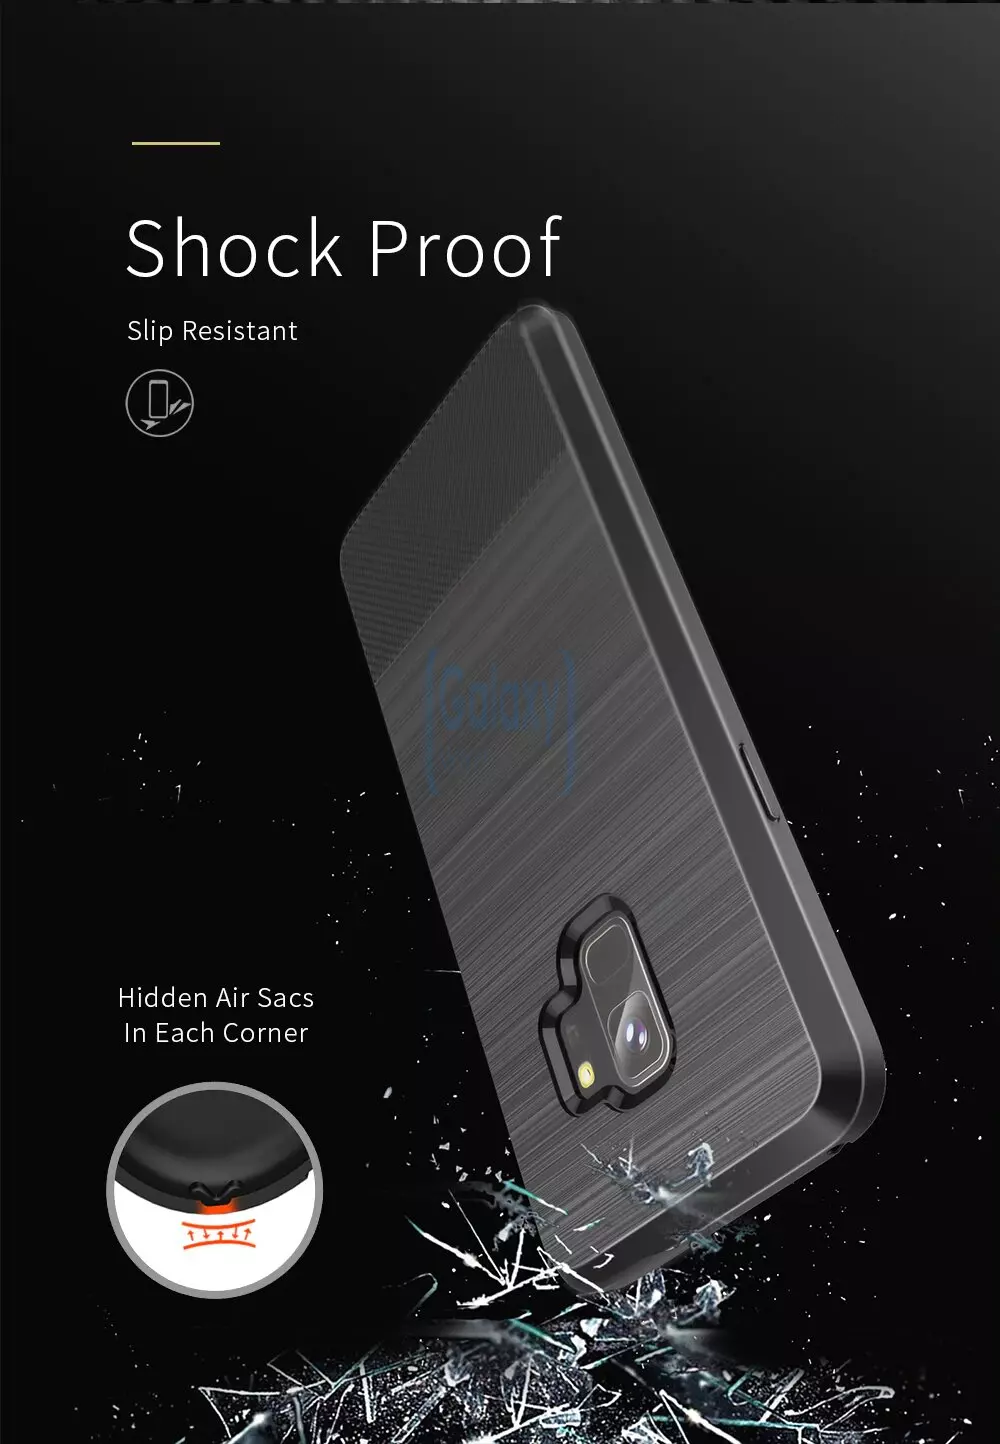 Чехол бампер Dux Ducis Carbon Magnetic Case для Samsung Galaxy S9 Black (Черный)